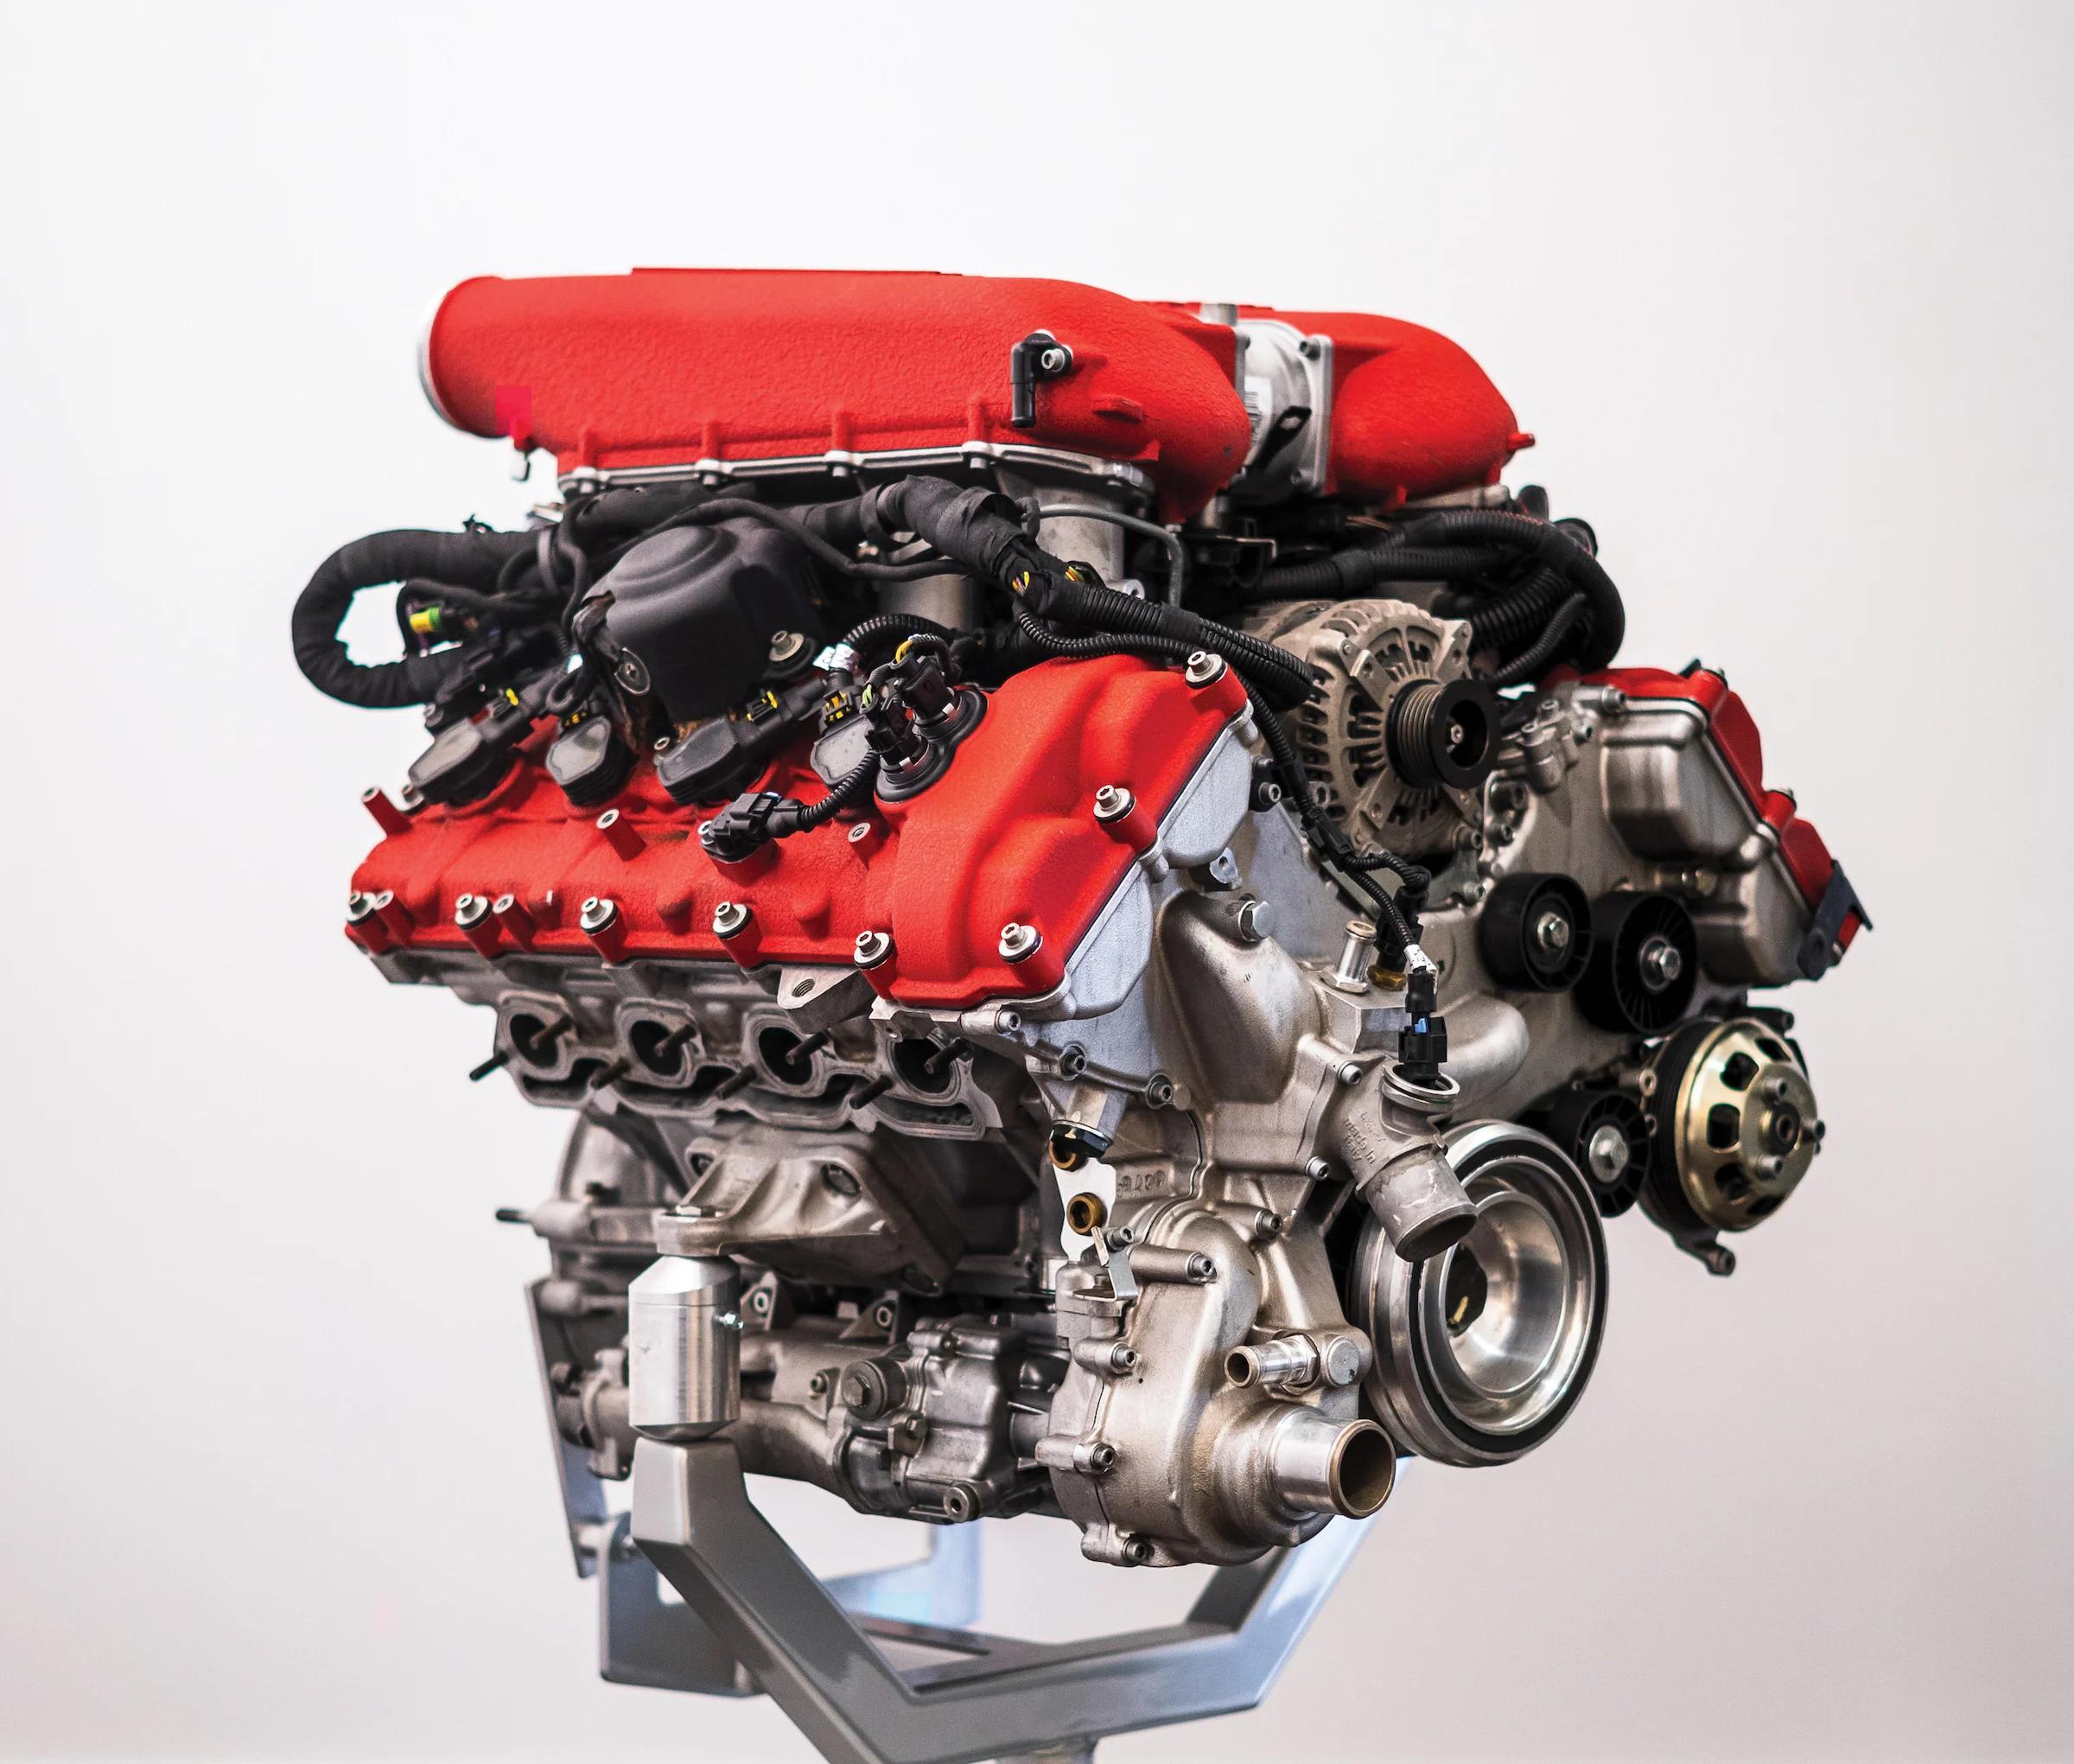 ferrari 458 engine - What engine is in a Ferrari 458